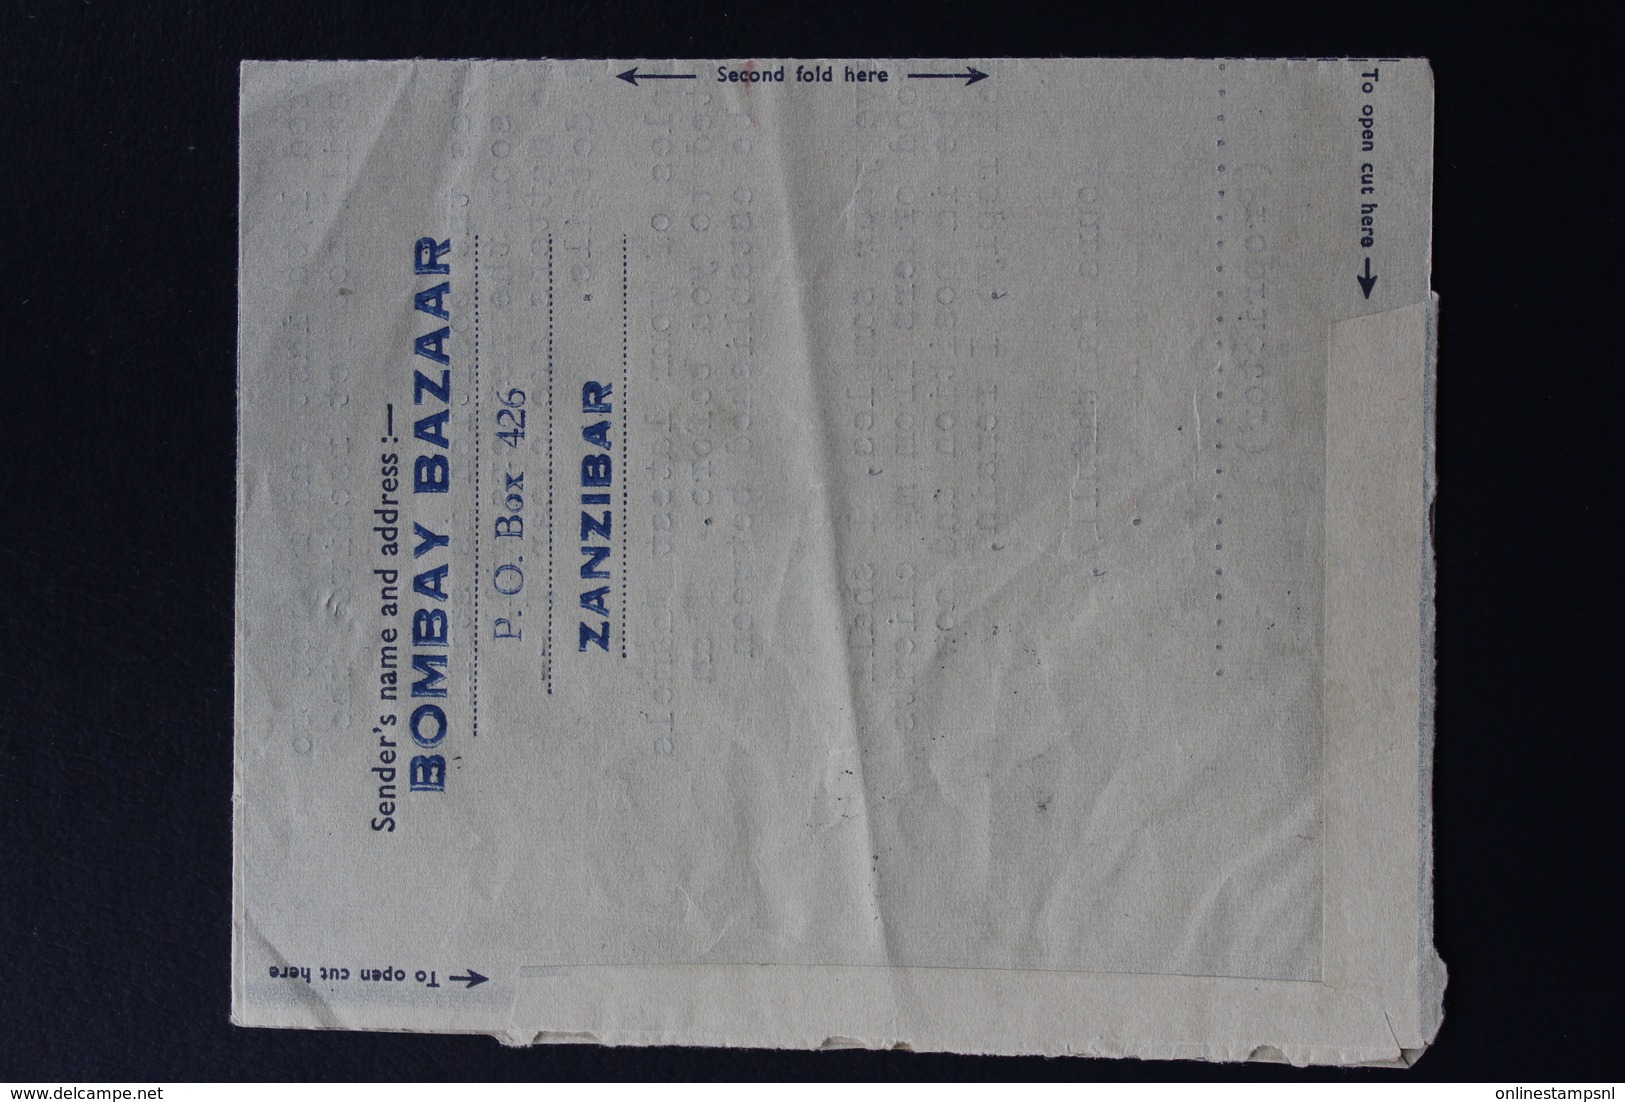 ZANZIBAR AIRLETTER  1952 TO RIJSWIJK HOLLAND SG 347 - Zanzibar (...-1963)